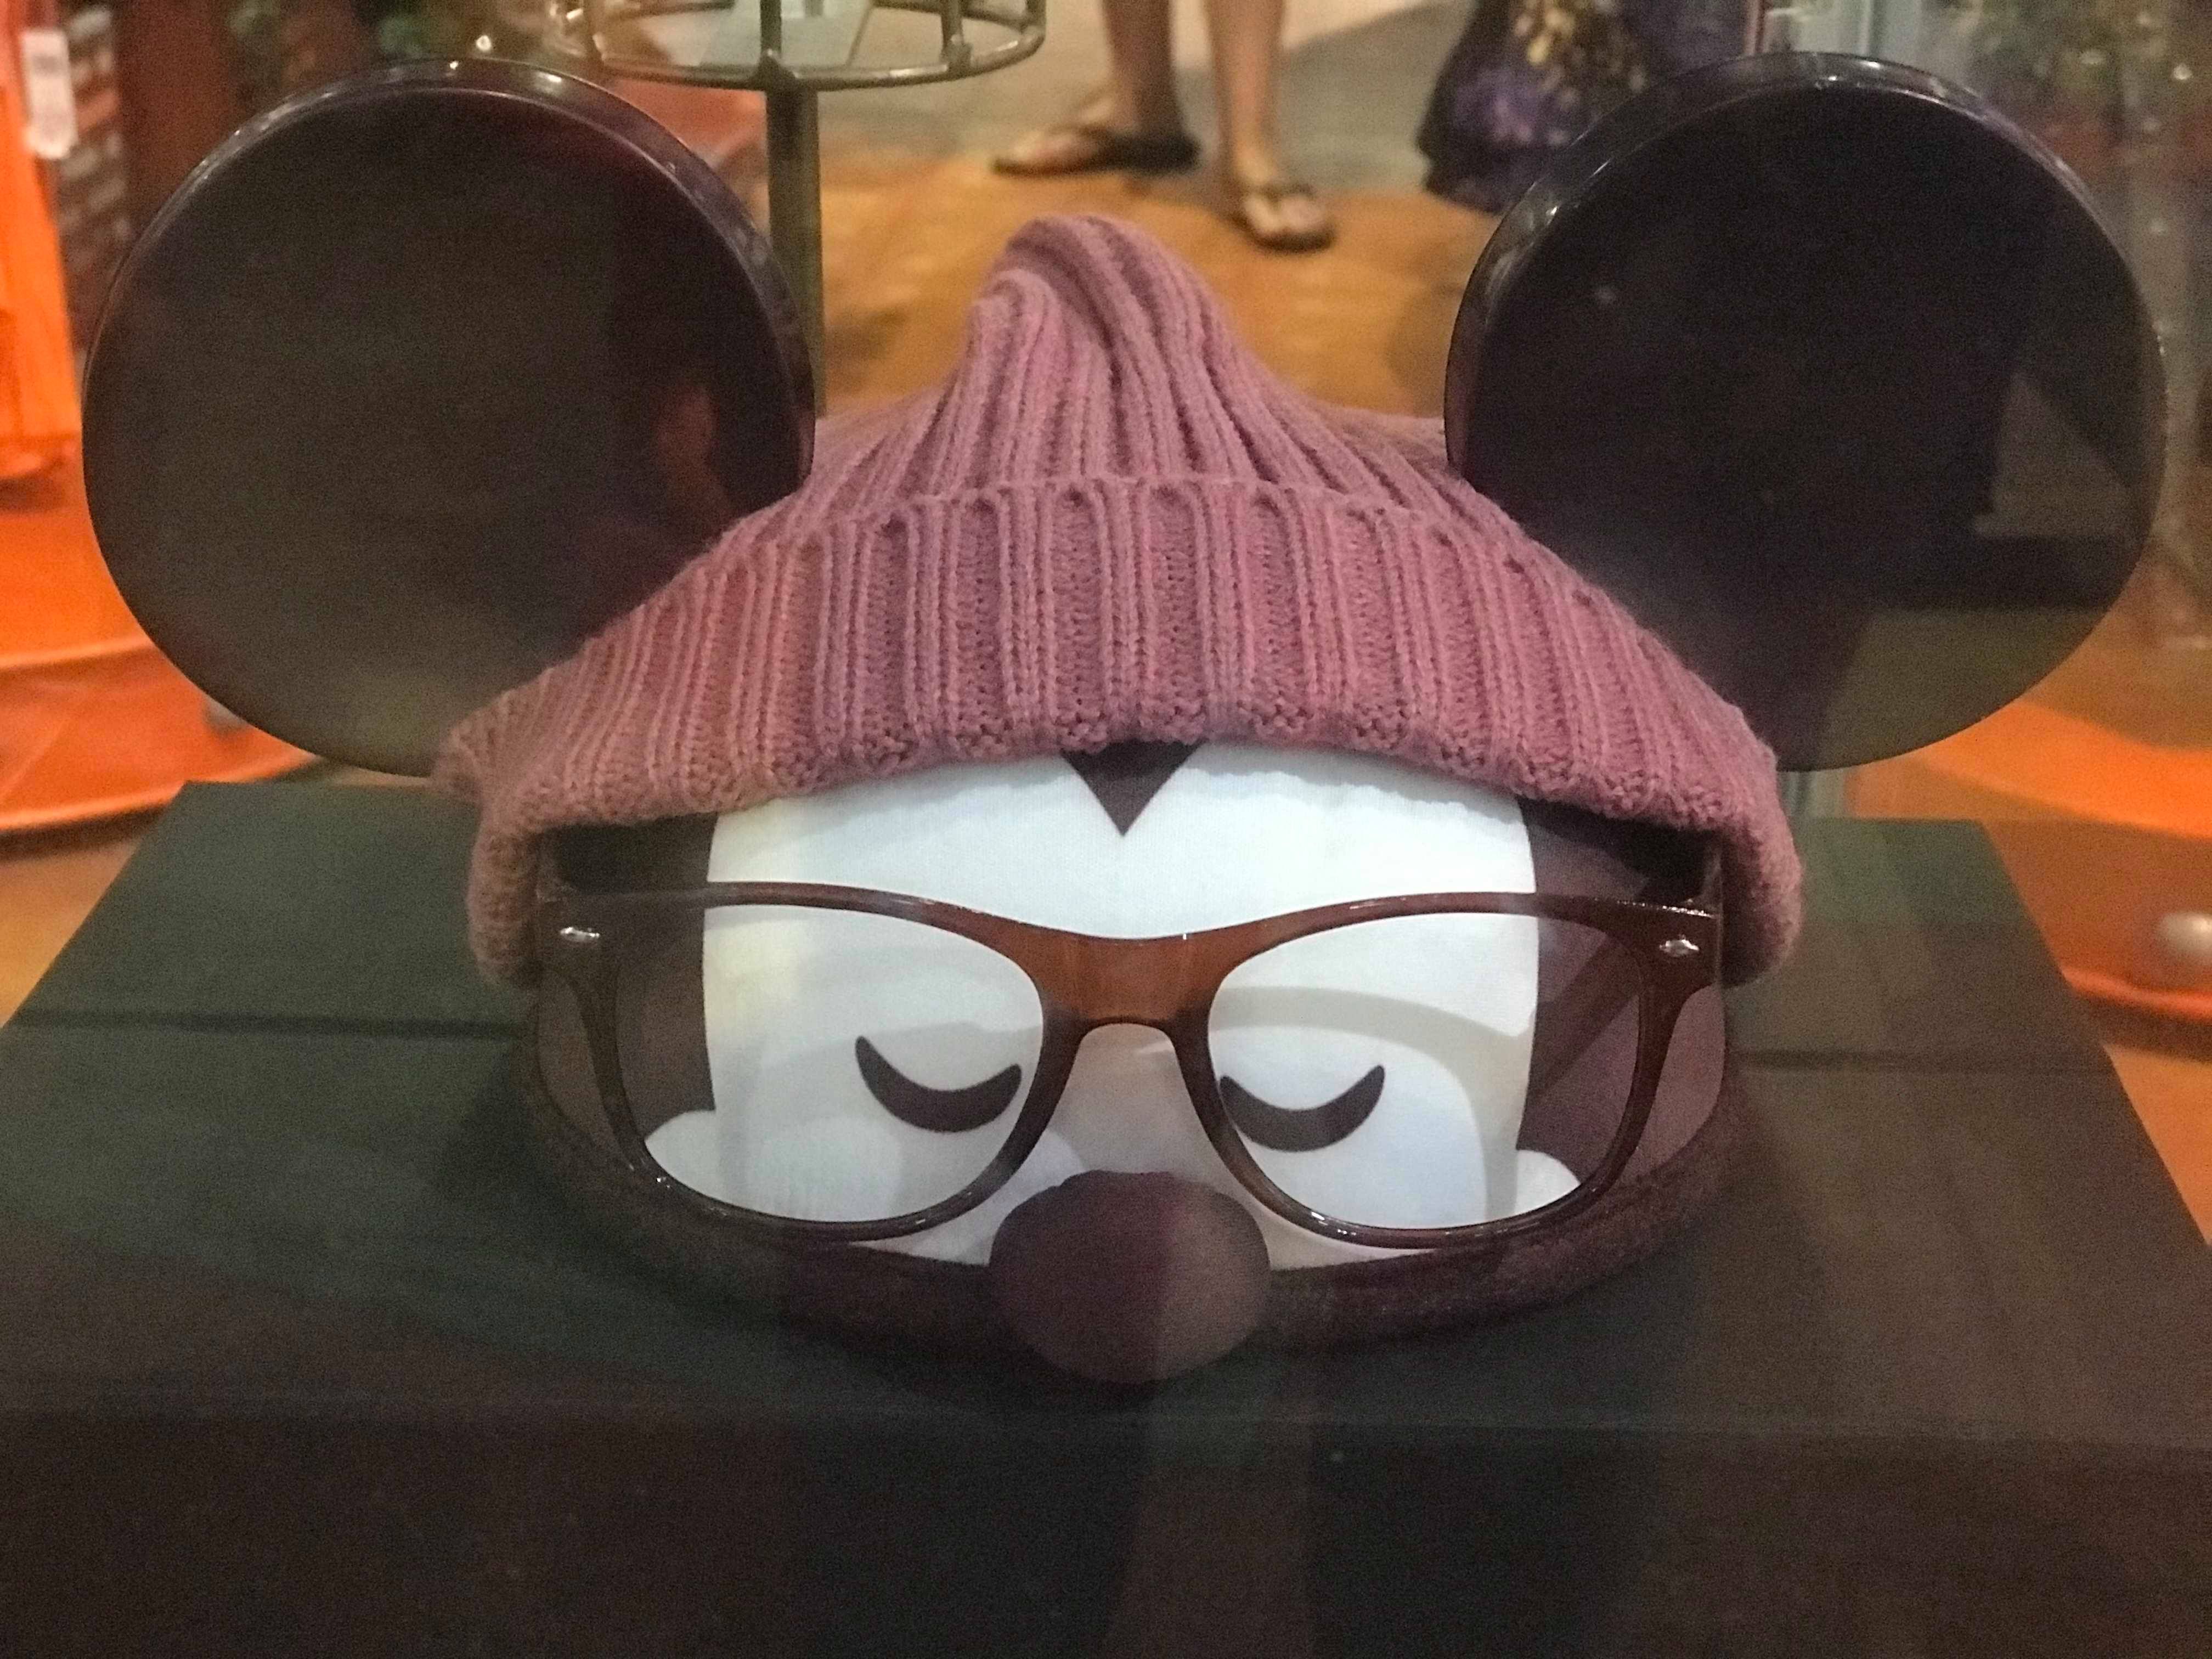 Hipster Mickey Designer Ears by Jerrod Maruyama Have Arrived at Disney Parks